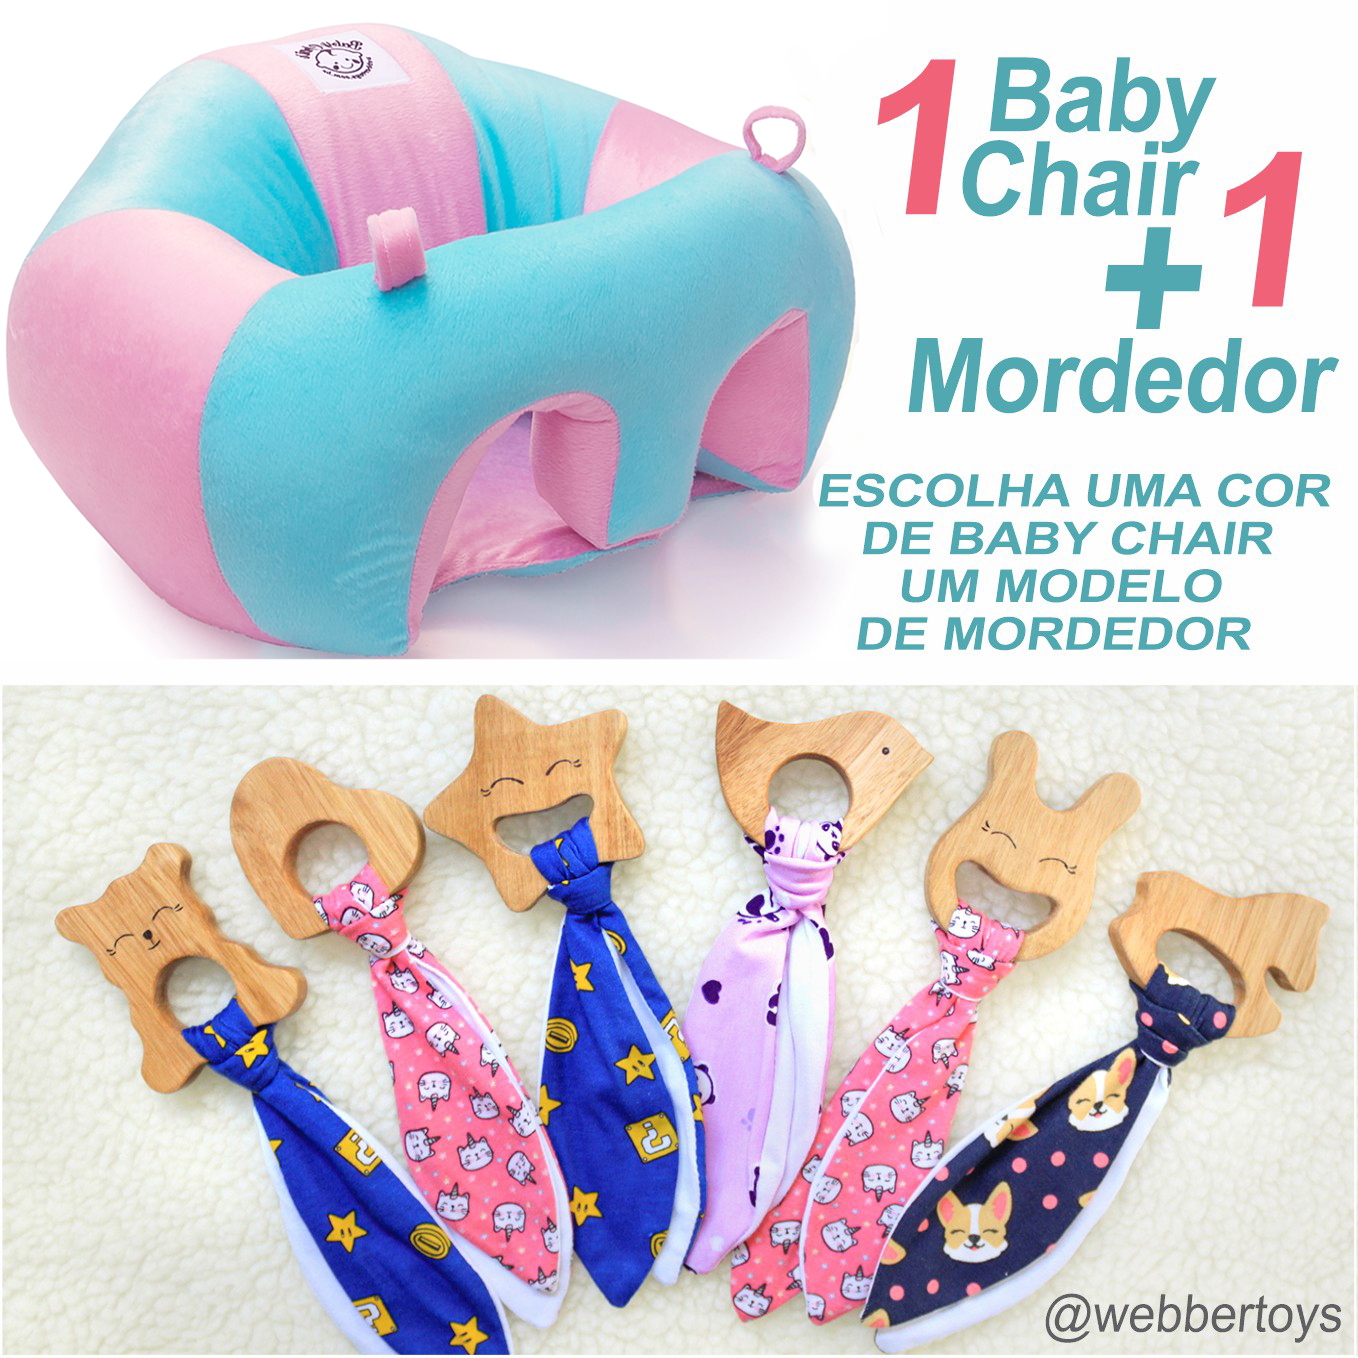 ALMOFADA BEBÊ - BABY CHAIR + MORDEDORES MADEIRA + PANINHO - WEBBER TOYS